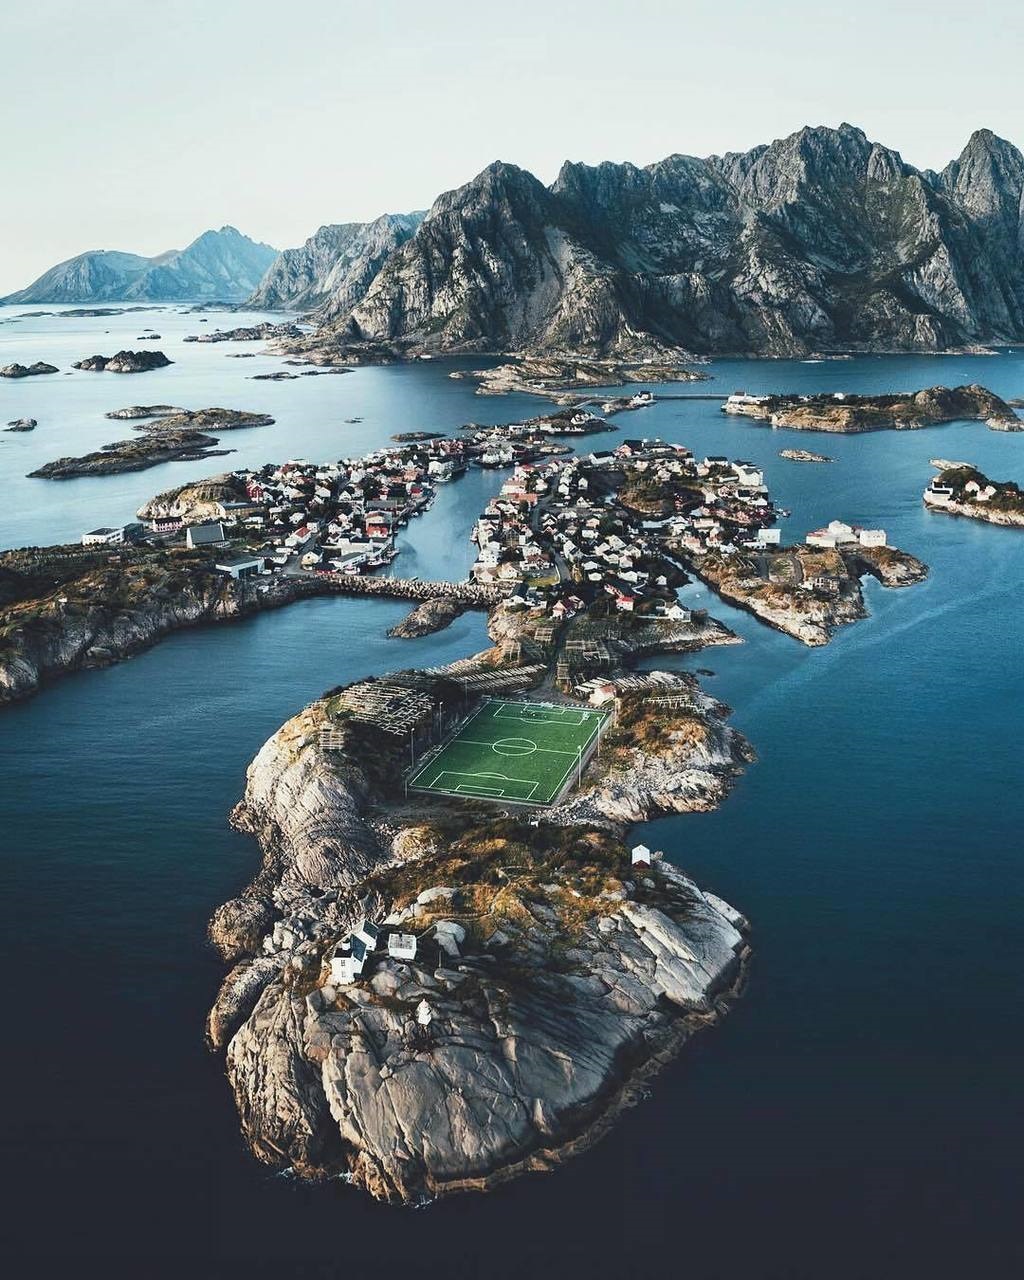 Let's Play, Football Field In Norway